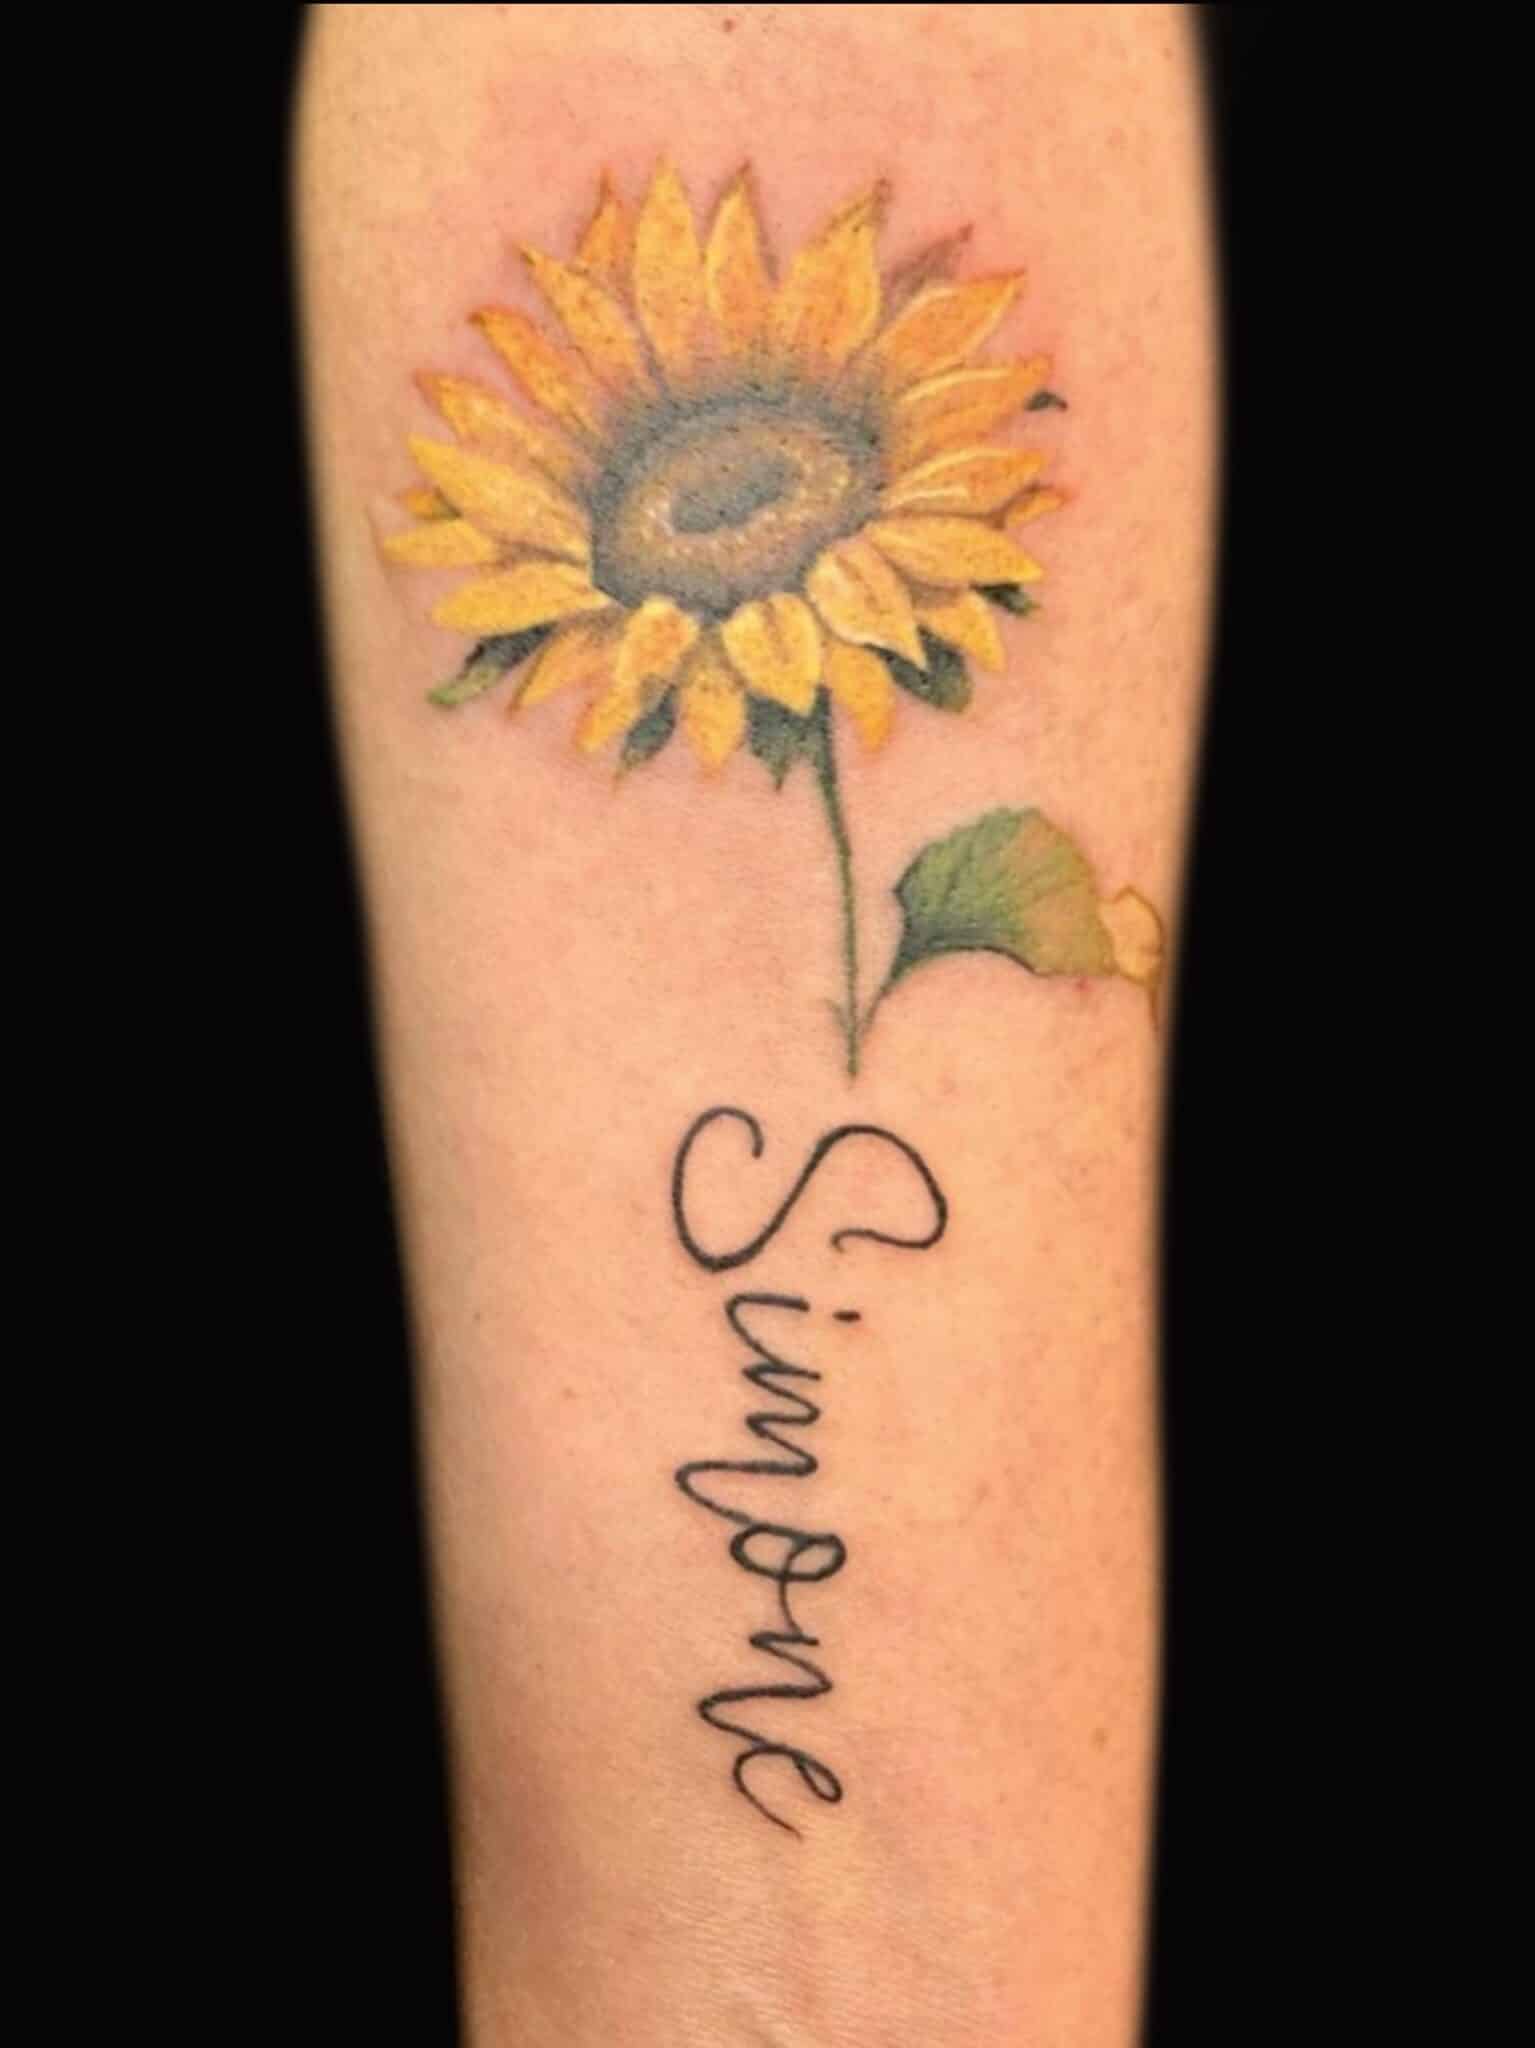 Sunflower tattoo design